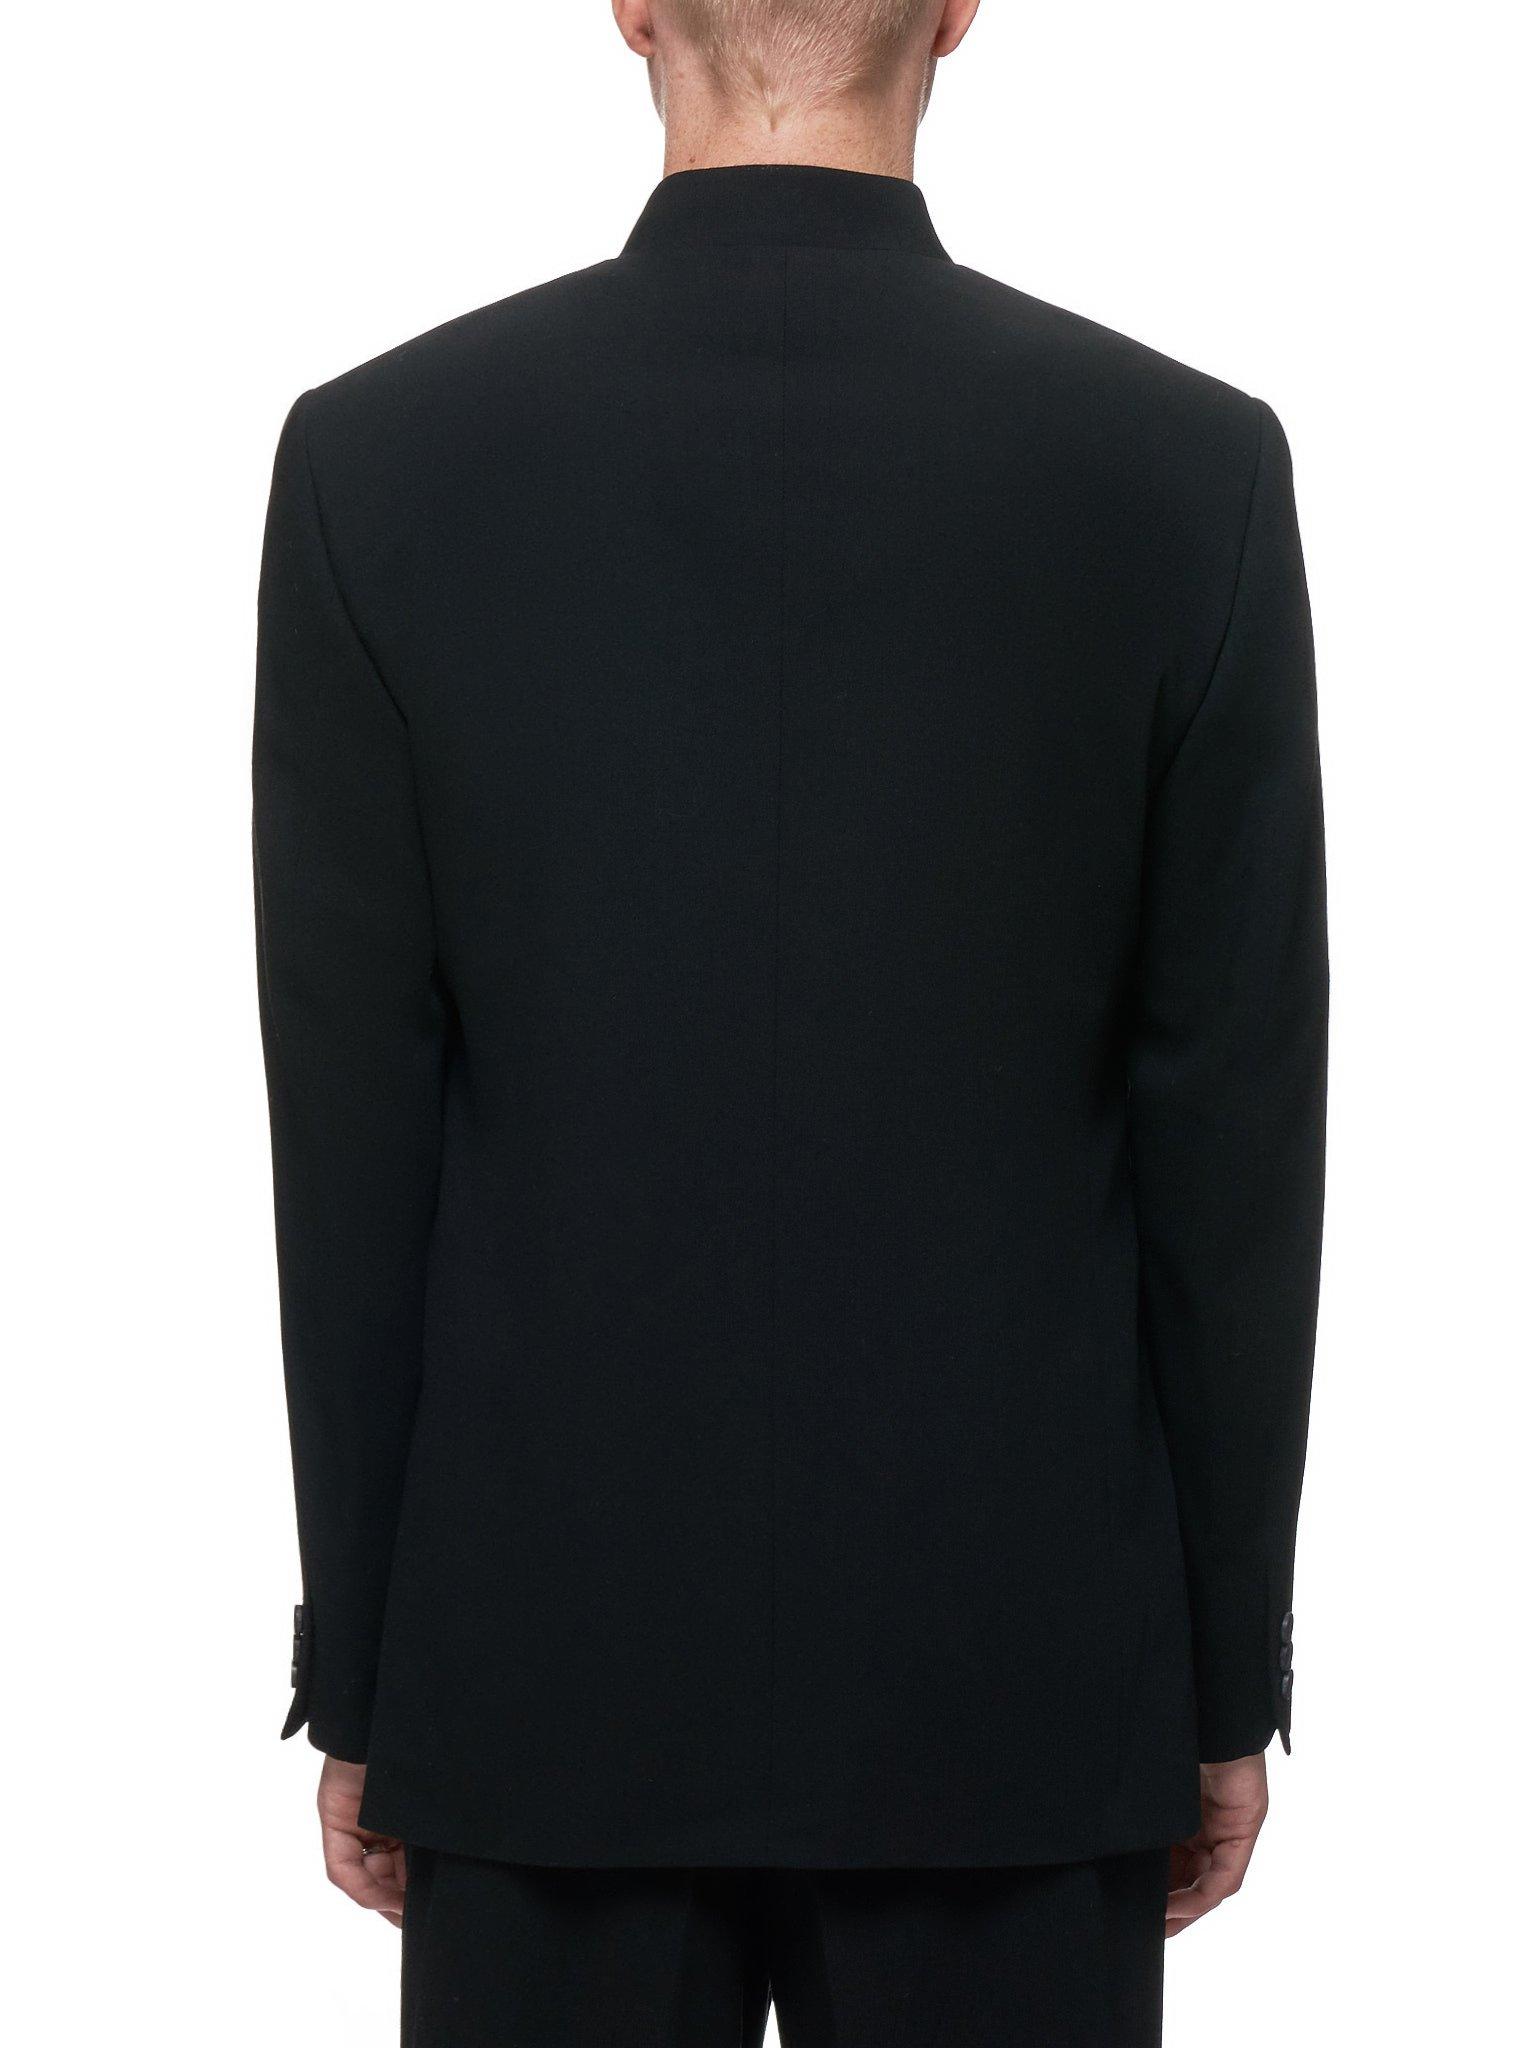 Issey Miyake Wool Gakuran Blazer in Black for Men - Lyst